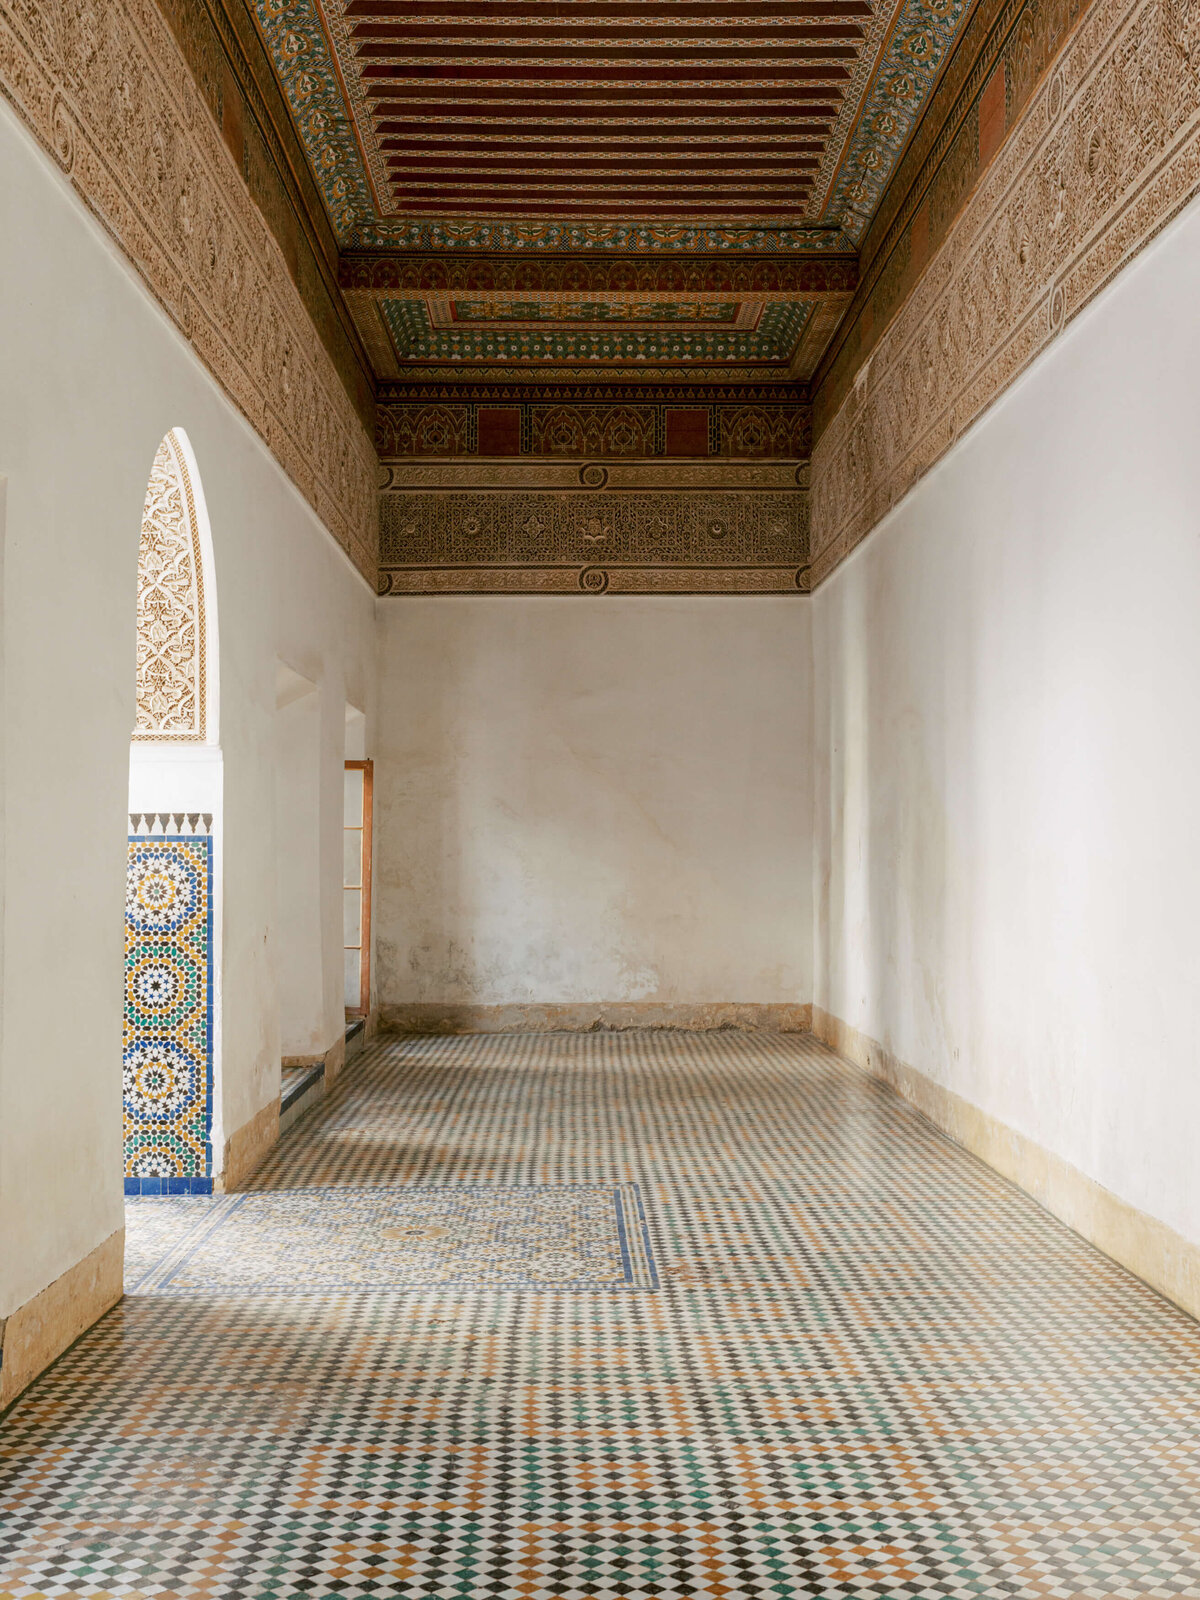 074-Morocco Editorial Travel Photographer